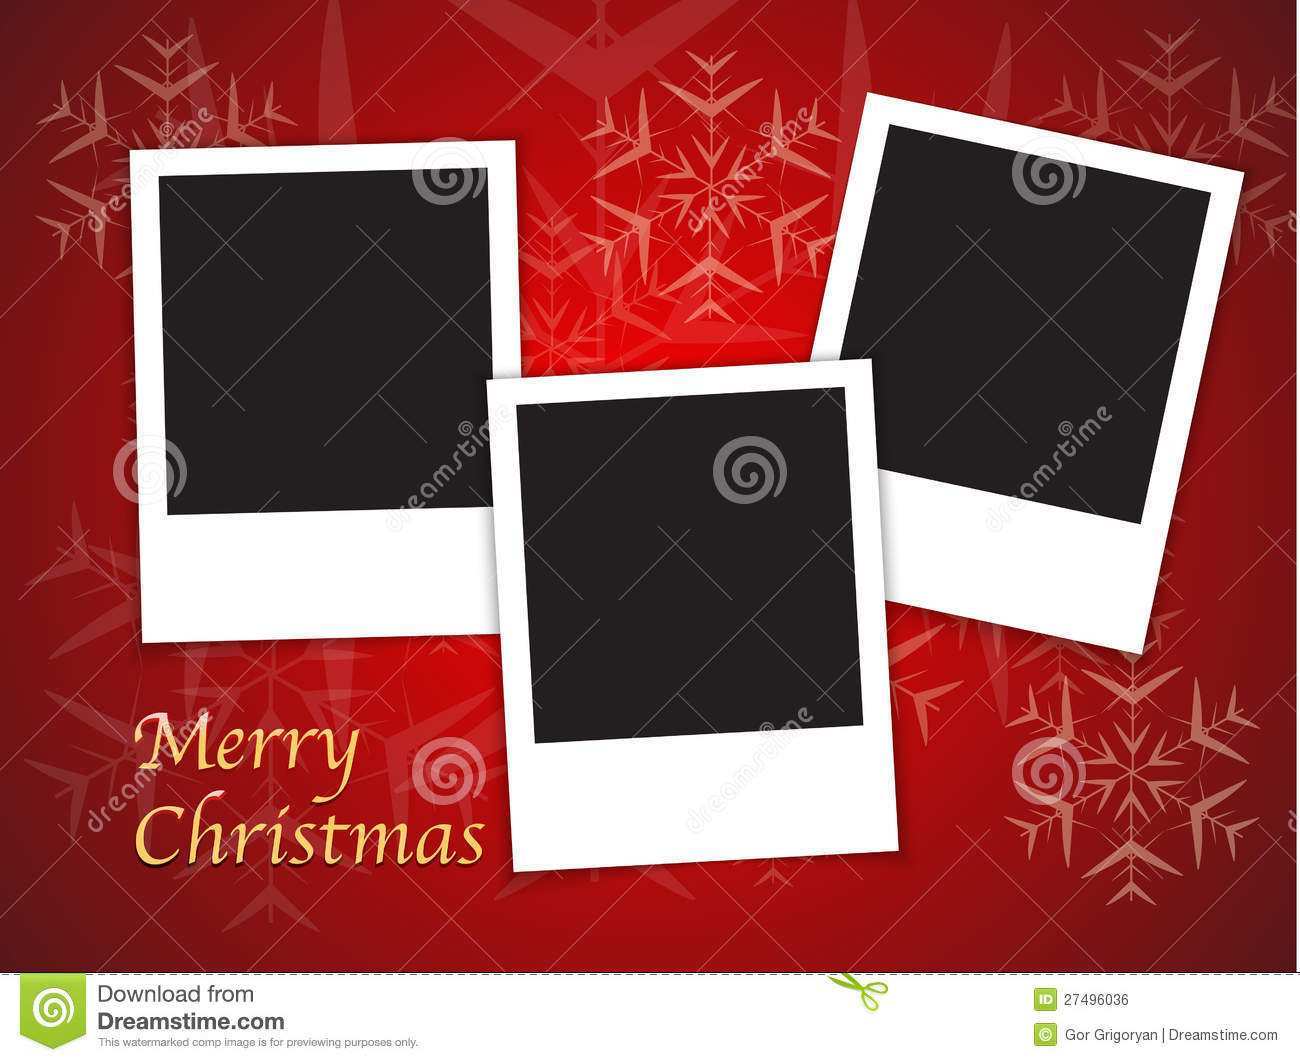 36 Create Christmas Card Template Illustrator Photo by Christmas Card Template Illustrator